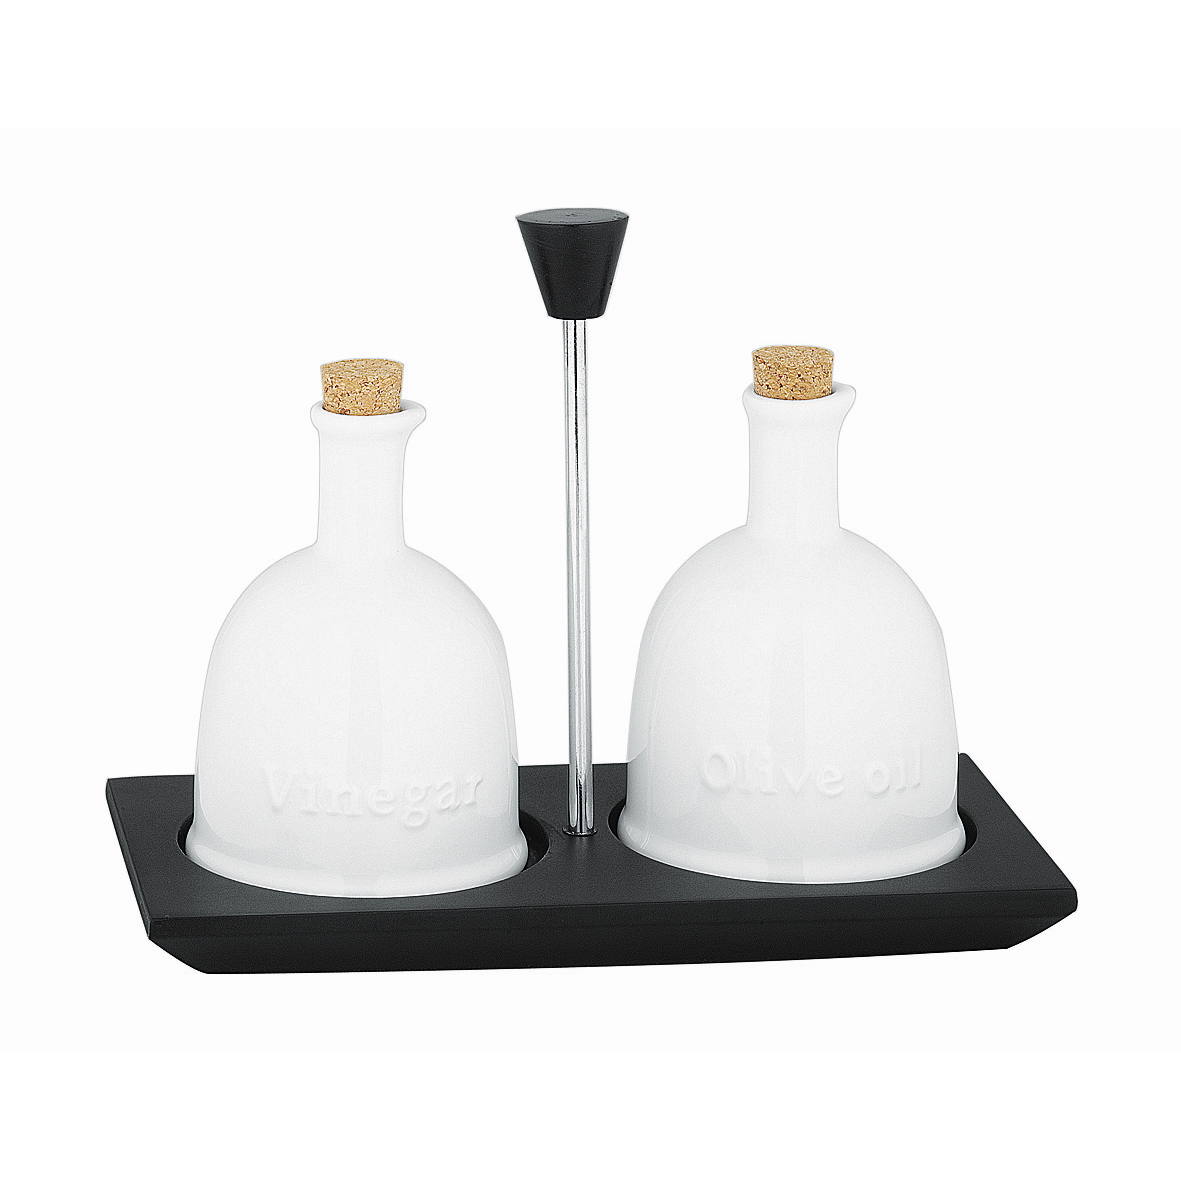 Avanti Stockholm Ceramic Oil and Vinegar Set with Stand